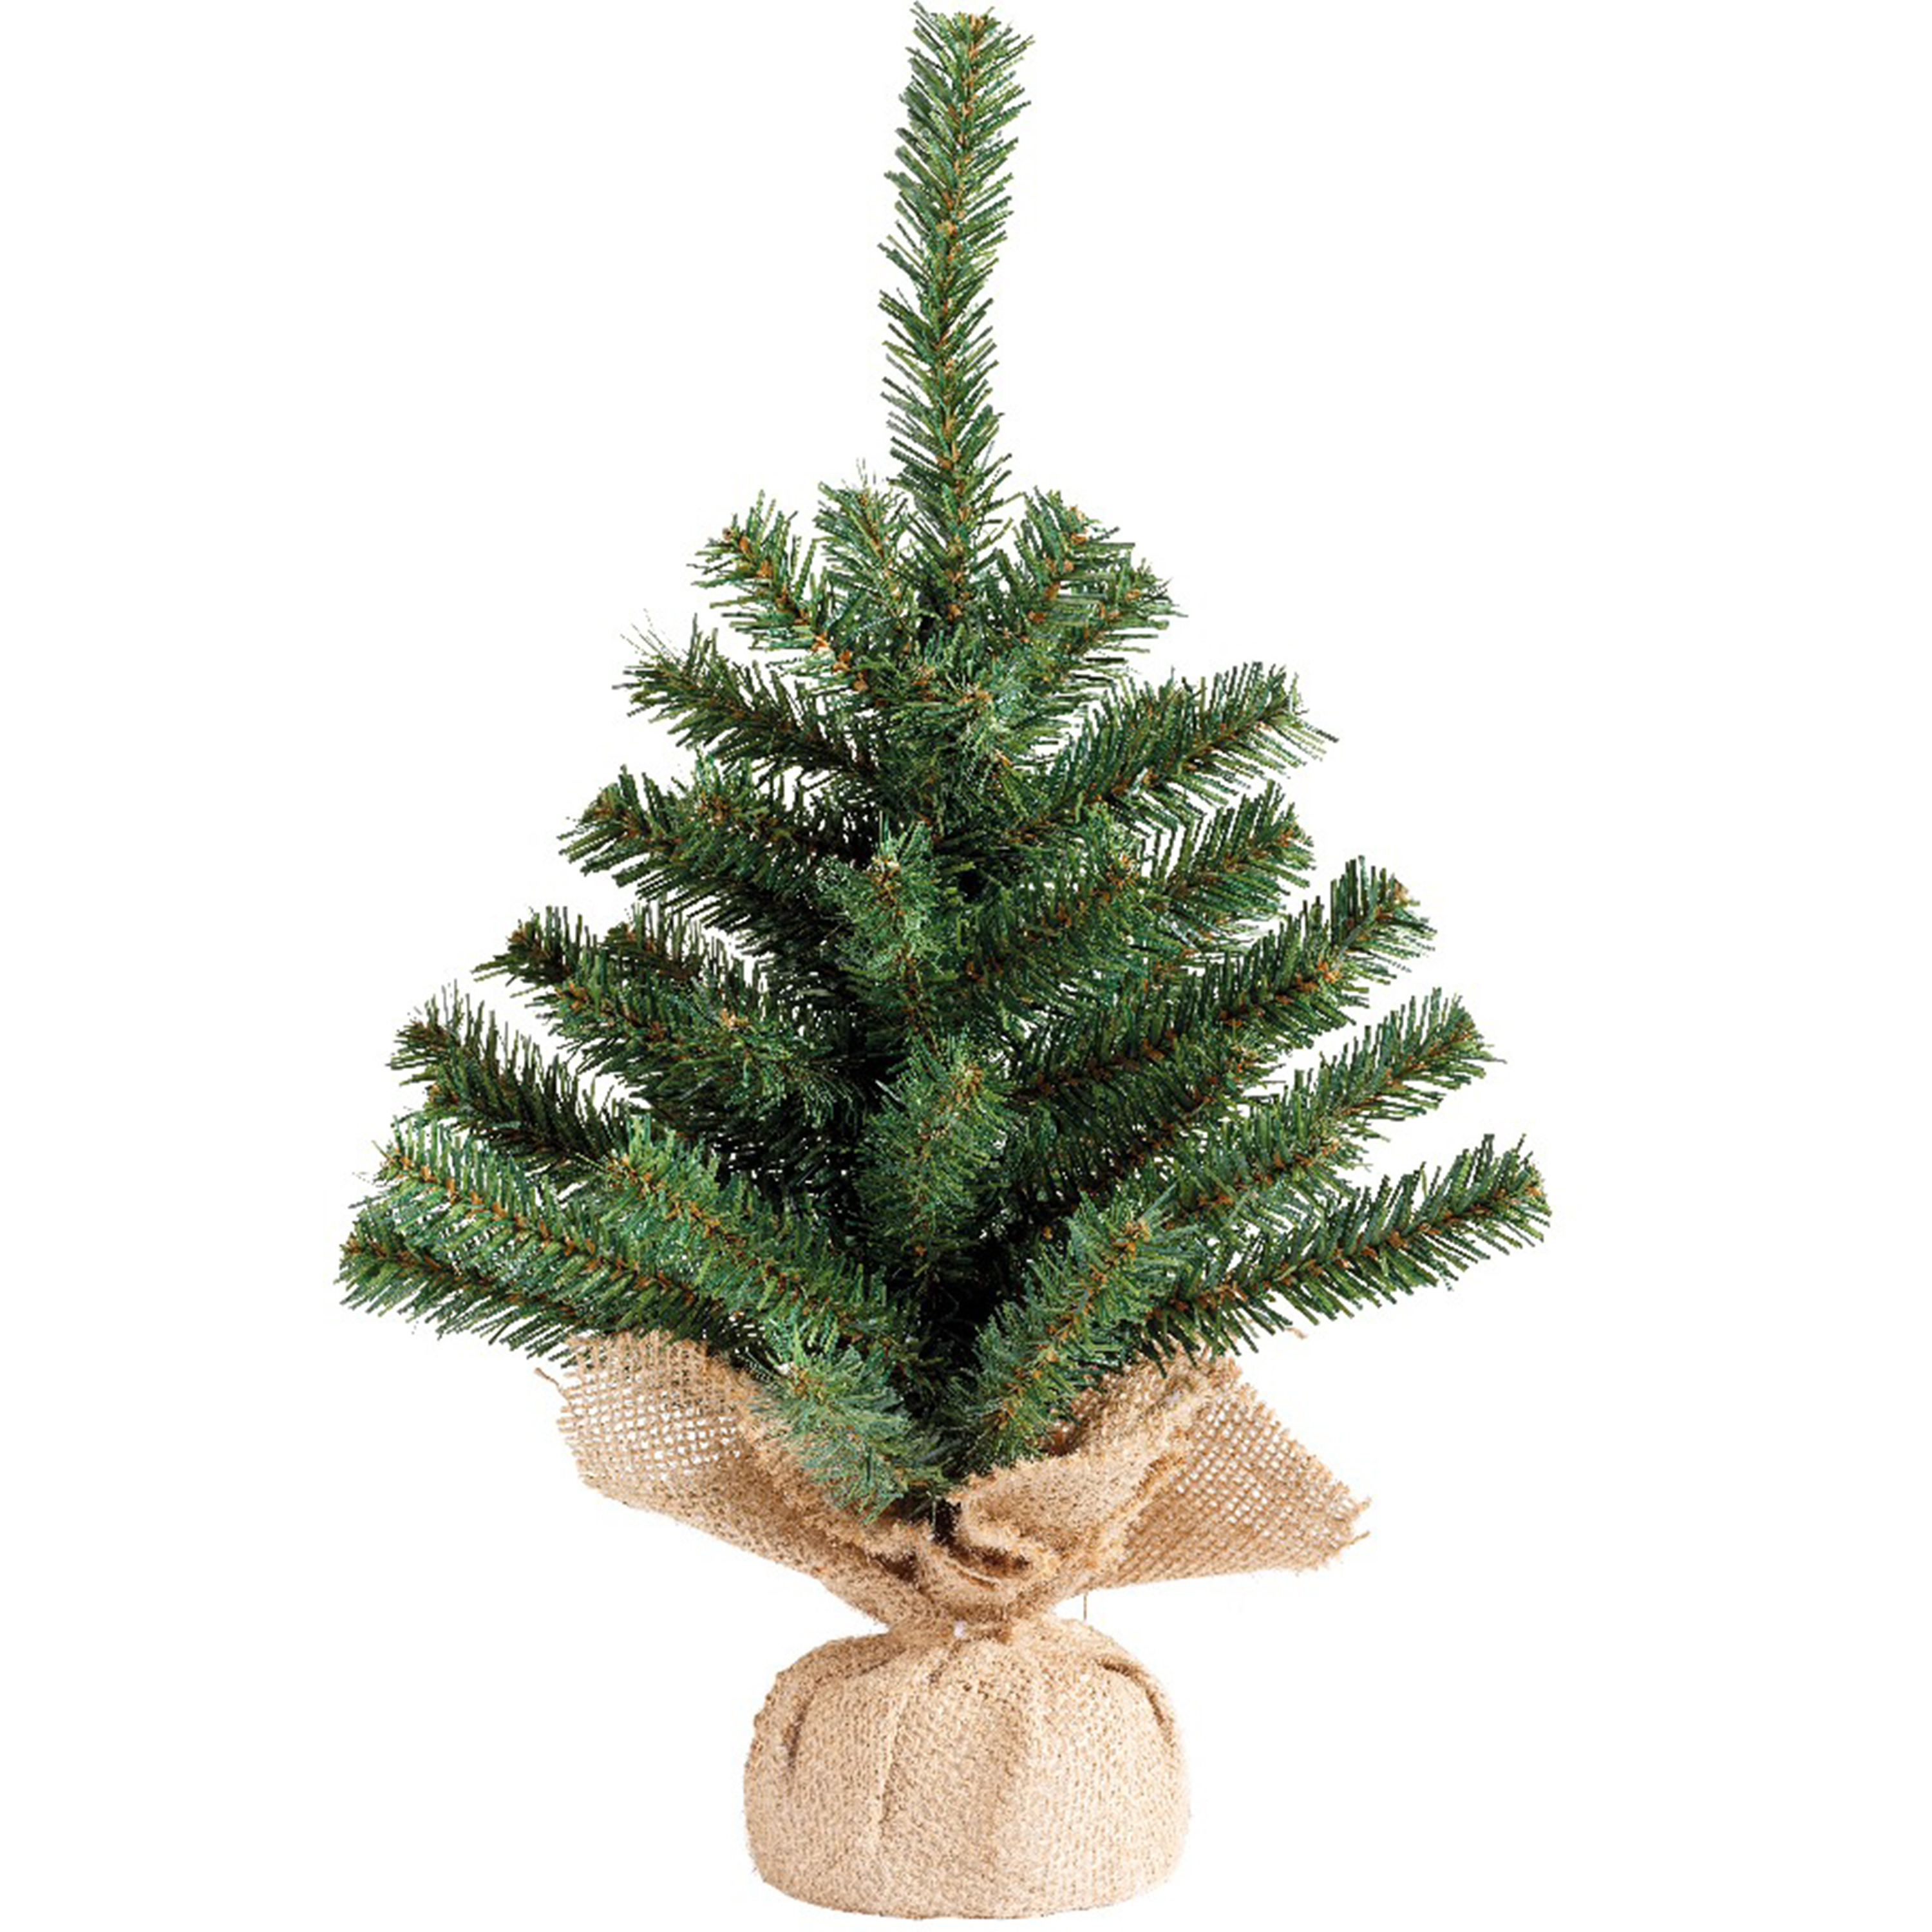 Kerst kunstboom groen in jute zak 45 cm